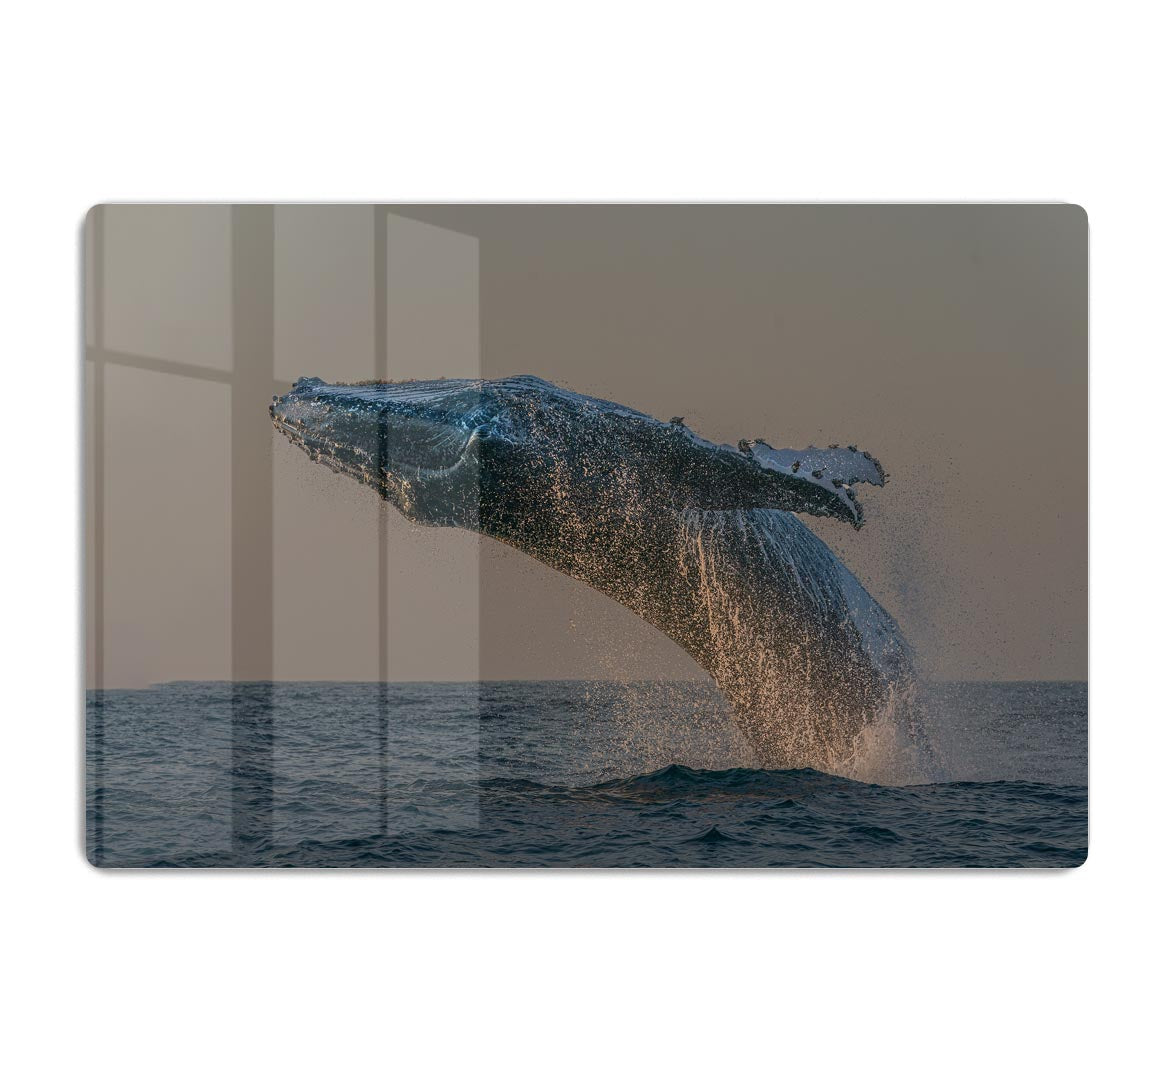 Whale Fliiping Out The Ocean HD Metal Print - Canvas Art Rocks - 1